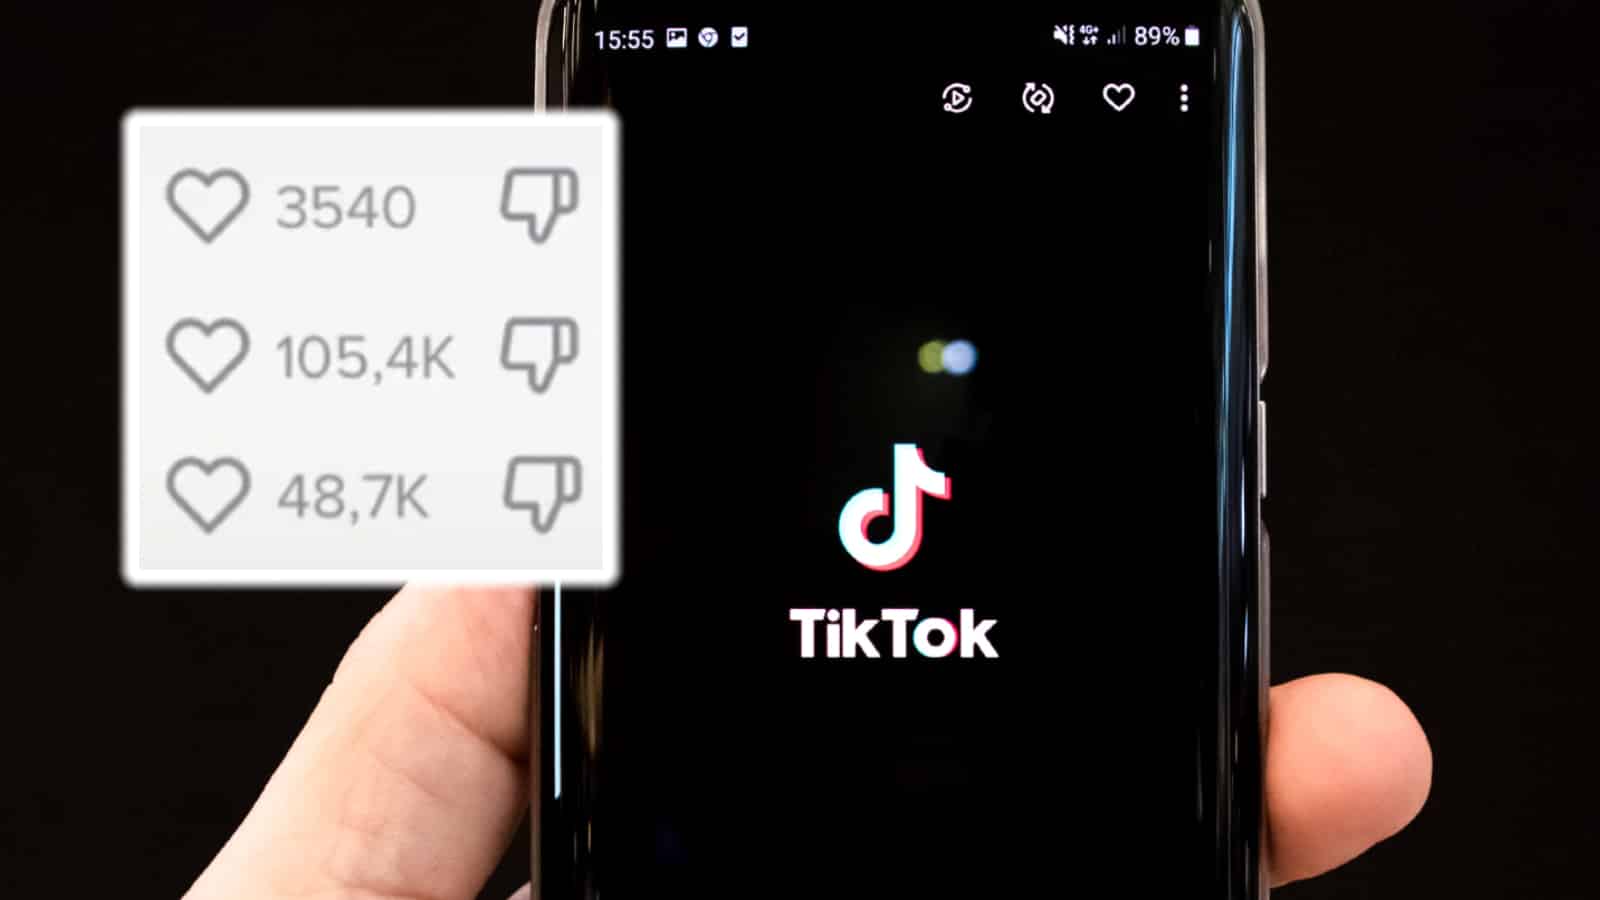 TikTok logo on phone screen next to screenshot of dislike button